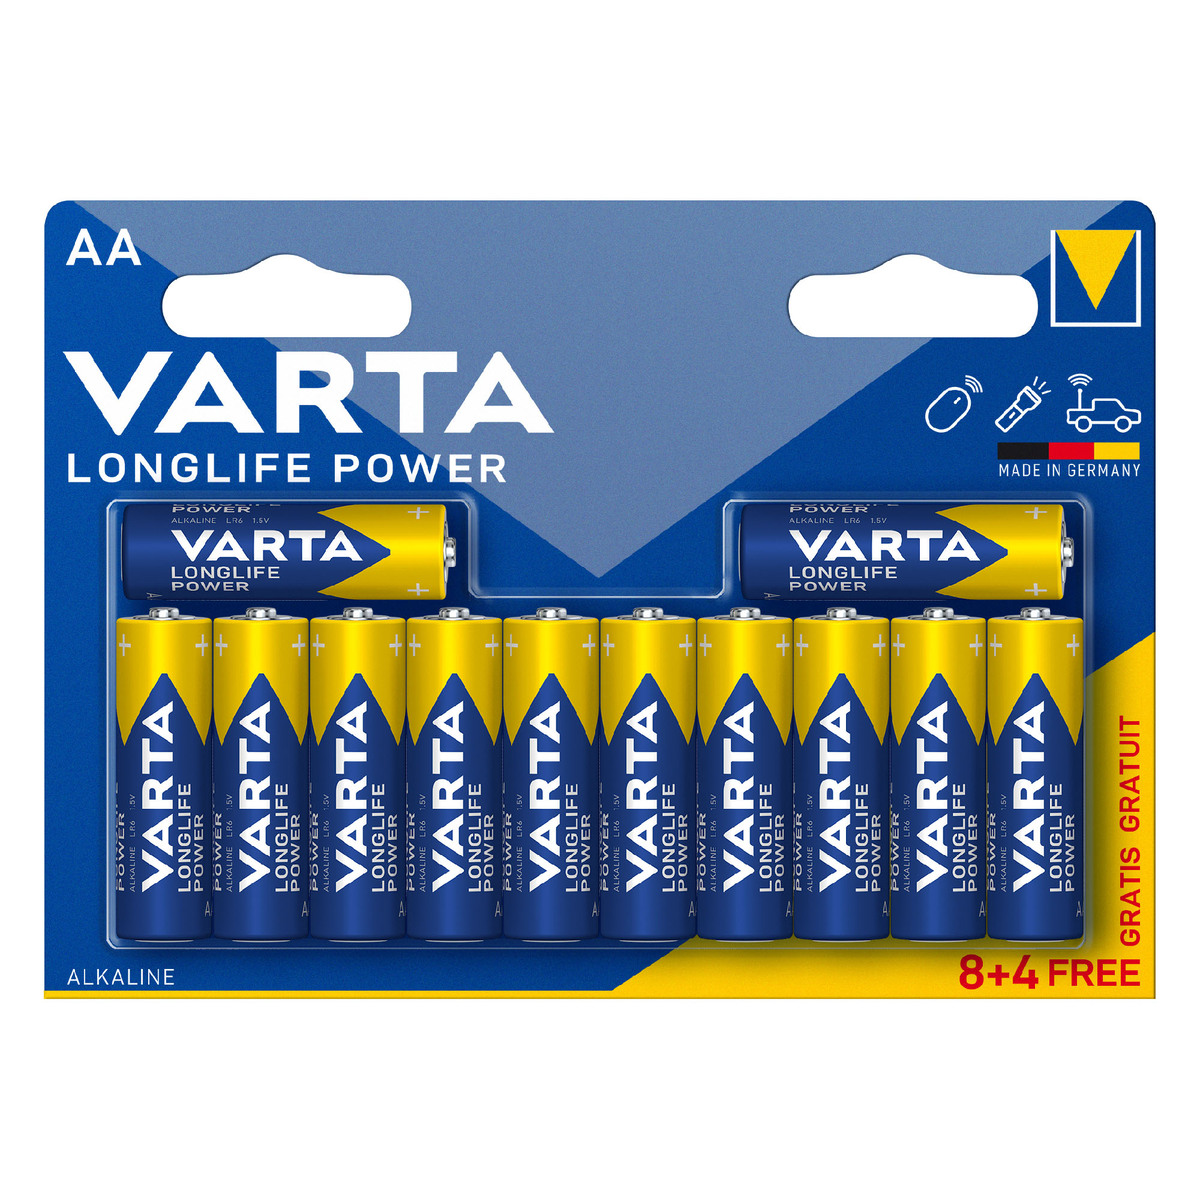 Varta  Long Life Power AA Alkaline Battery 8+4